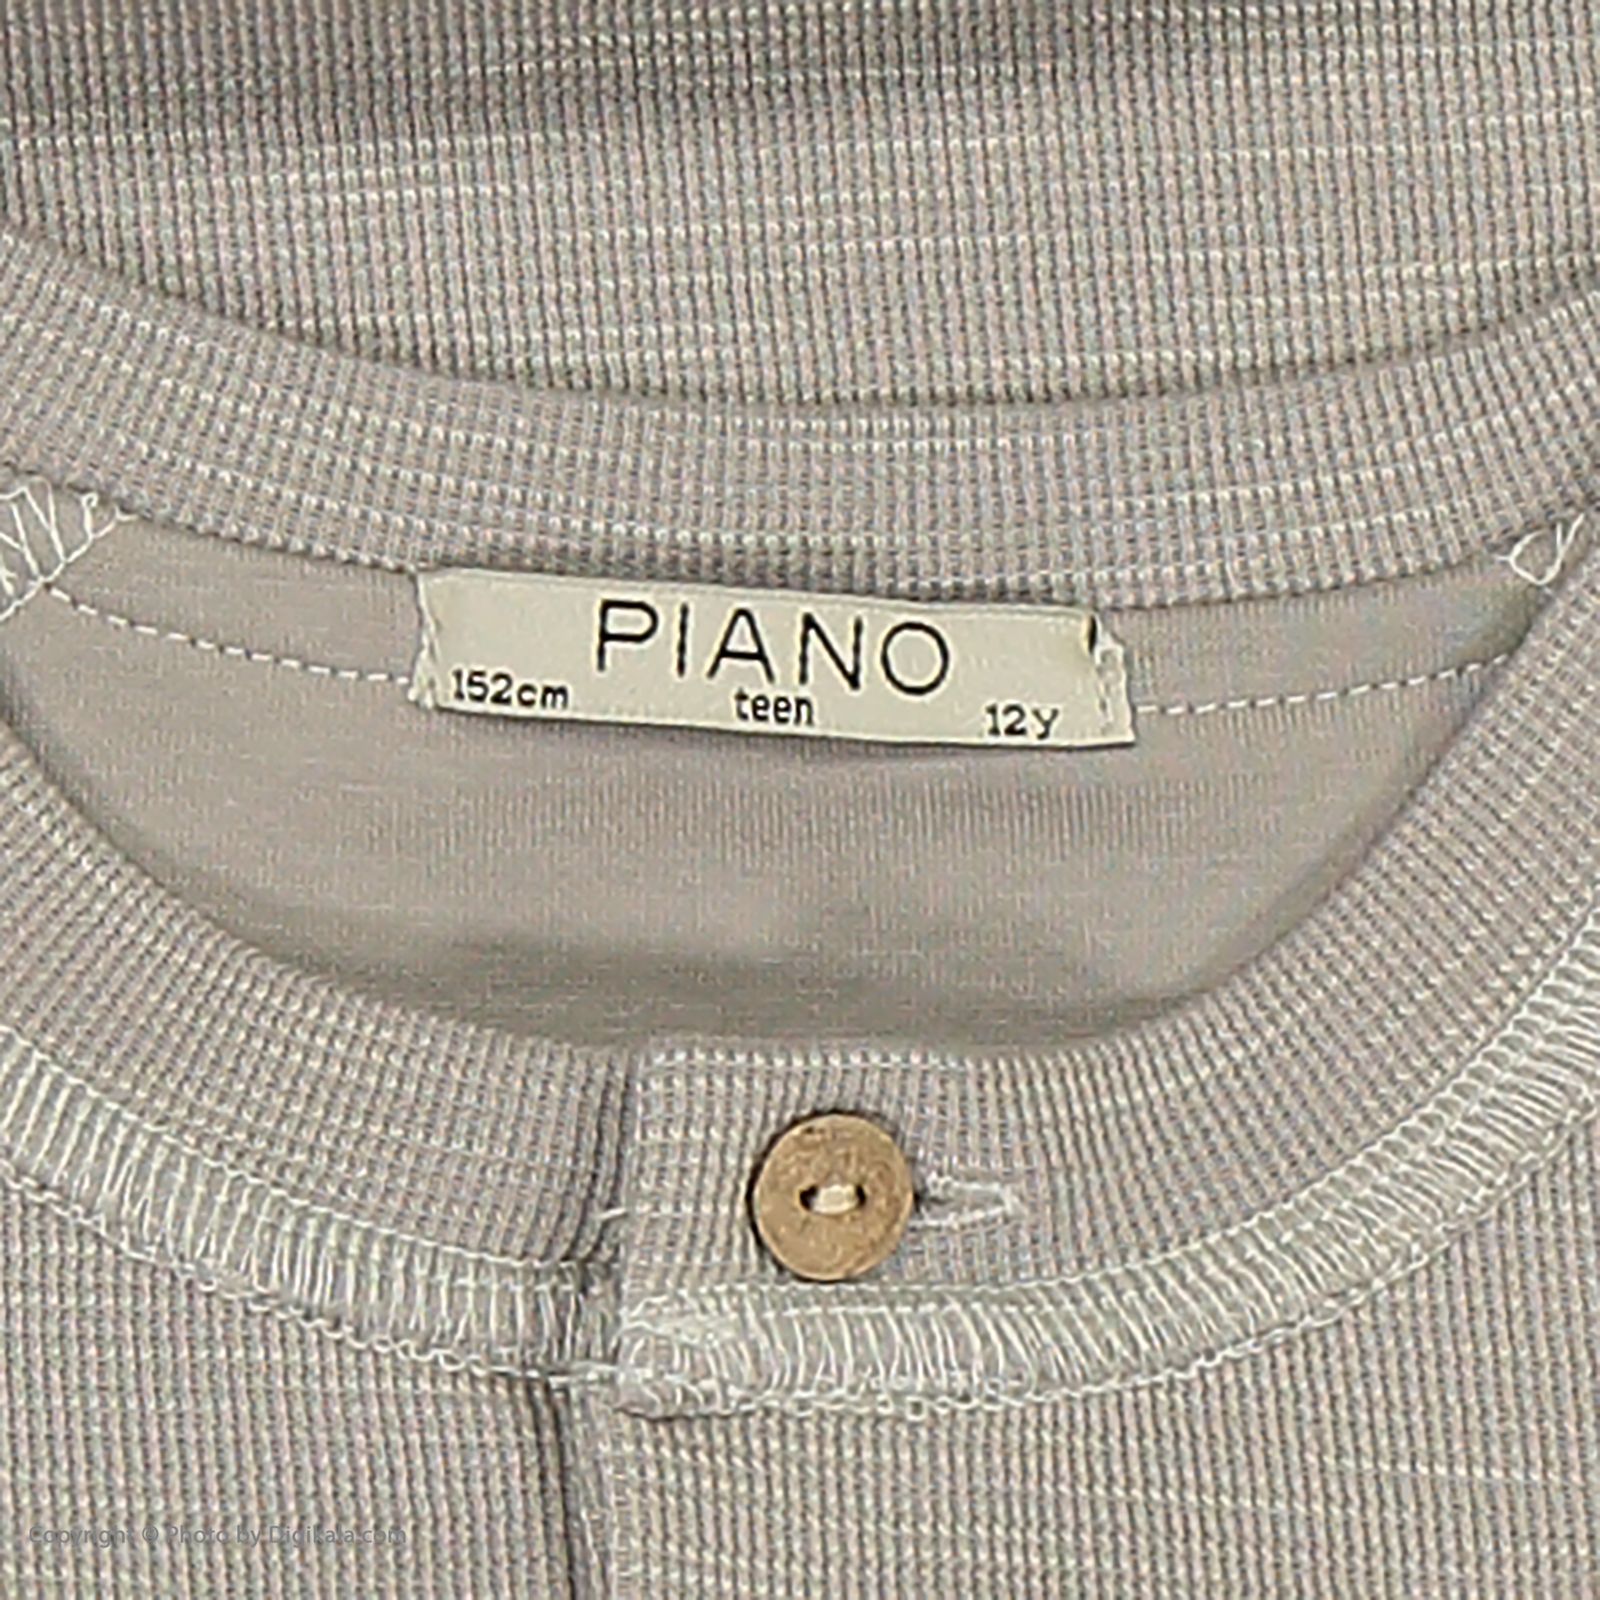 تی شرت پسرانه پیانو مدل 1009009801309-92 -  - 5